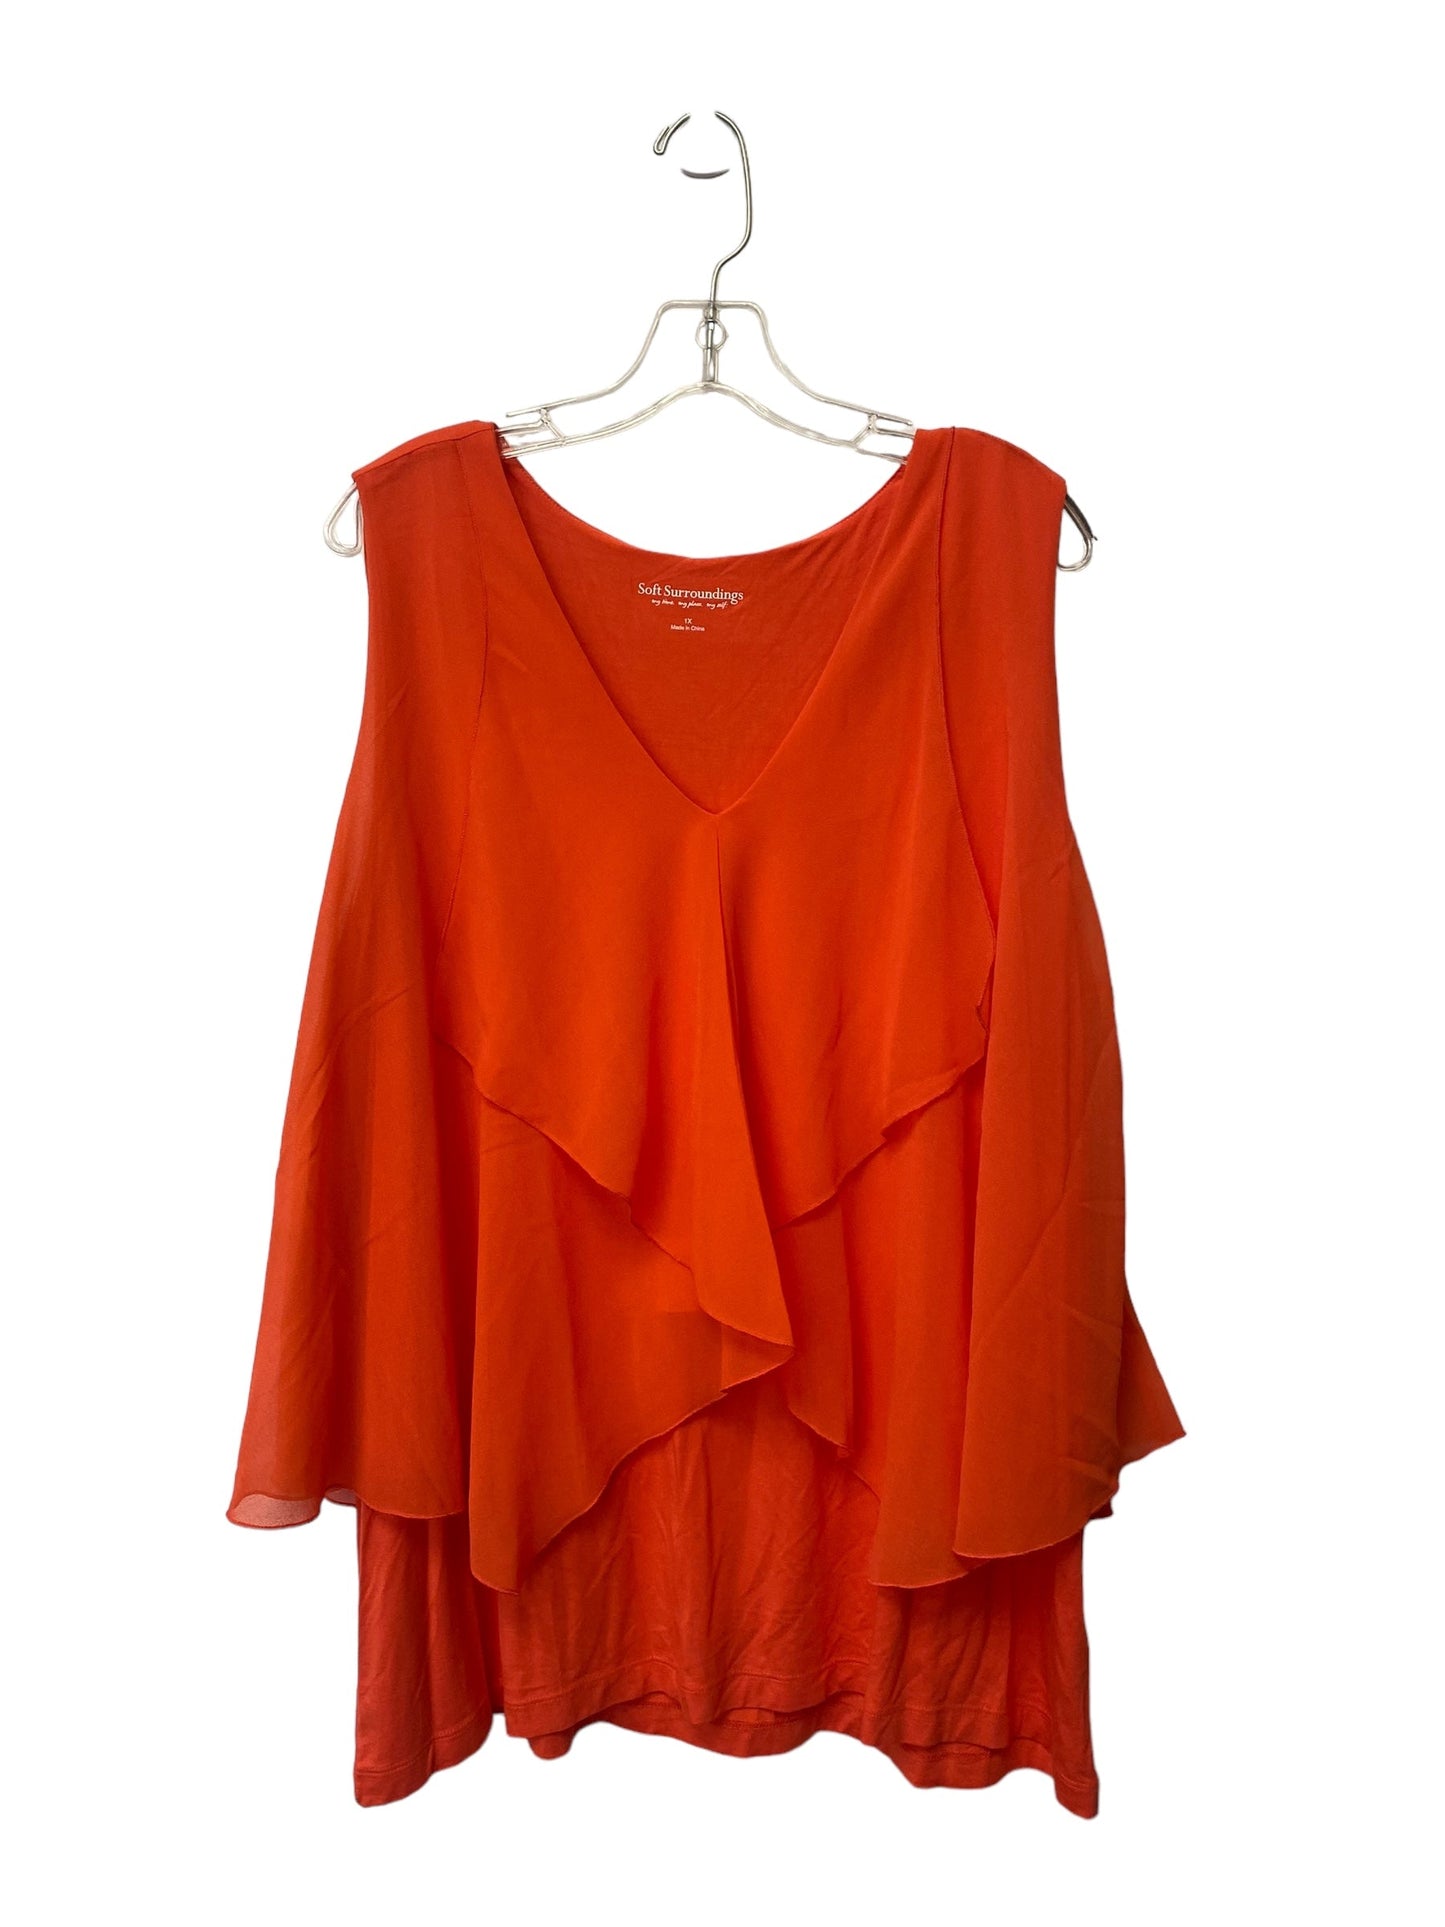 Orange Top Sleeveless Soft Surroundings, Size 1x